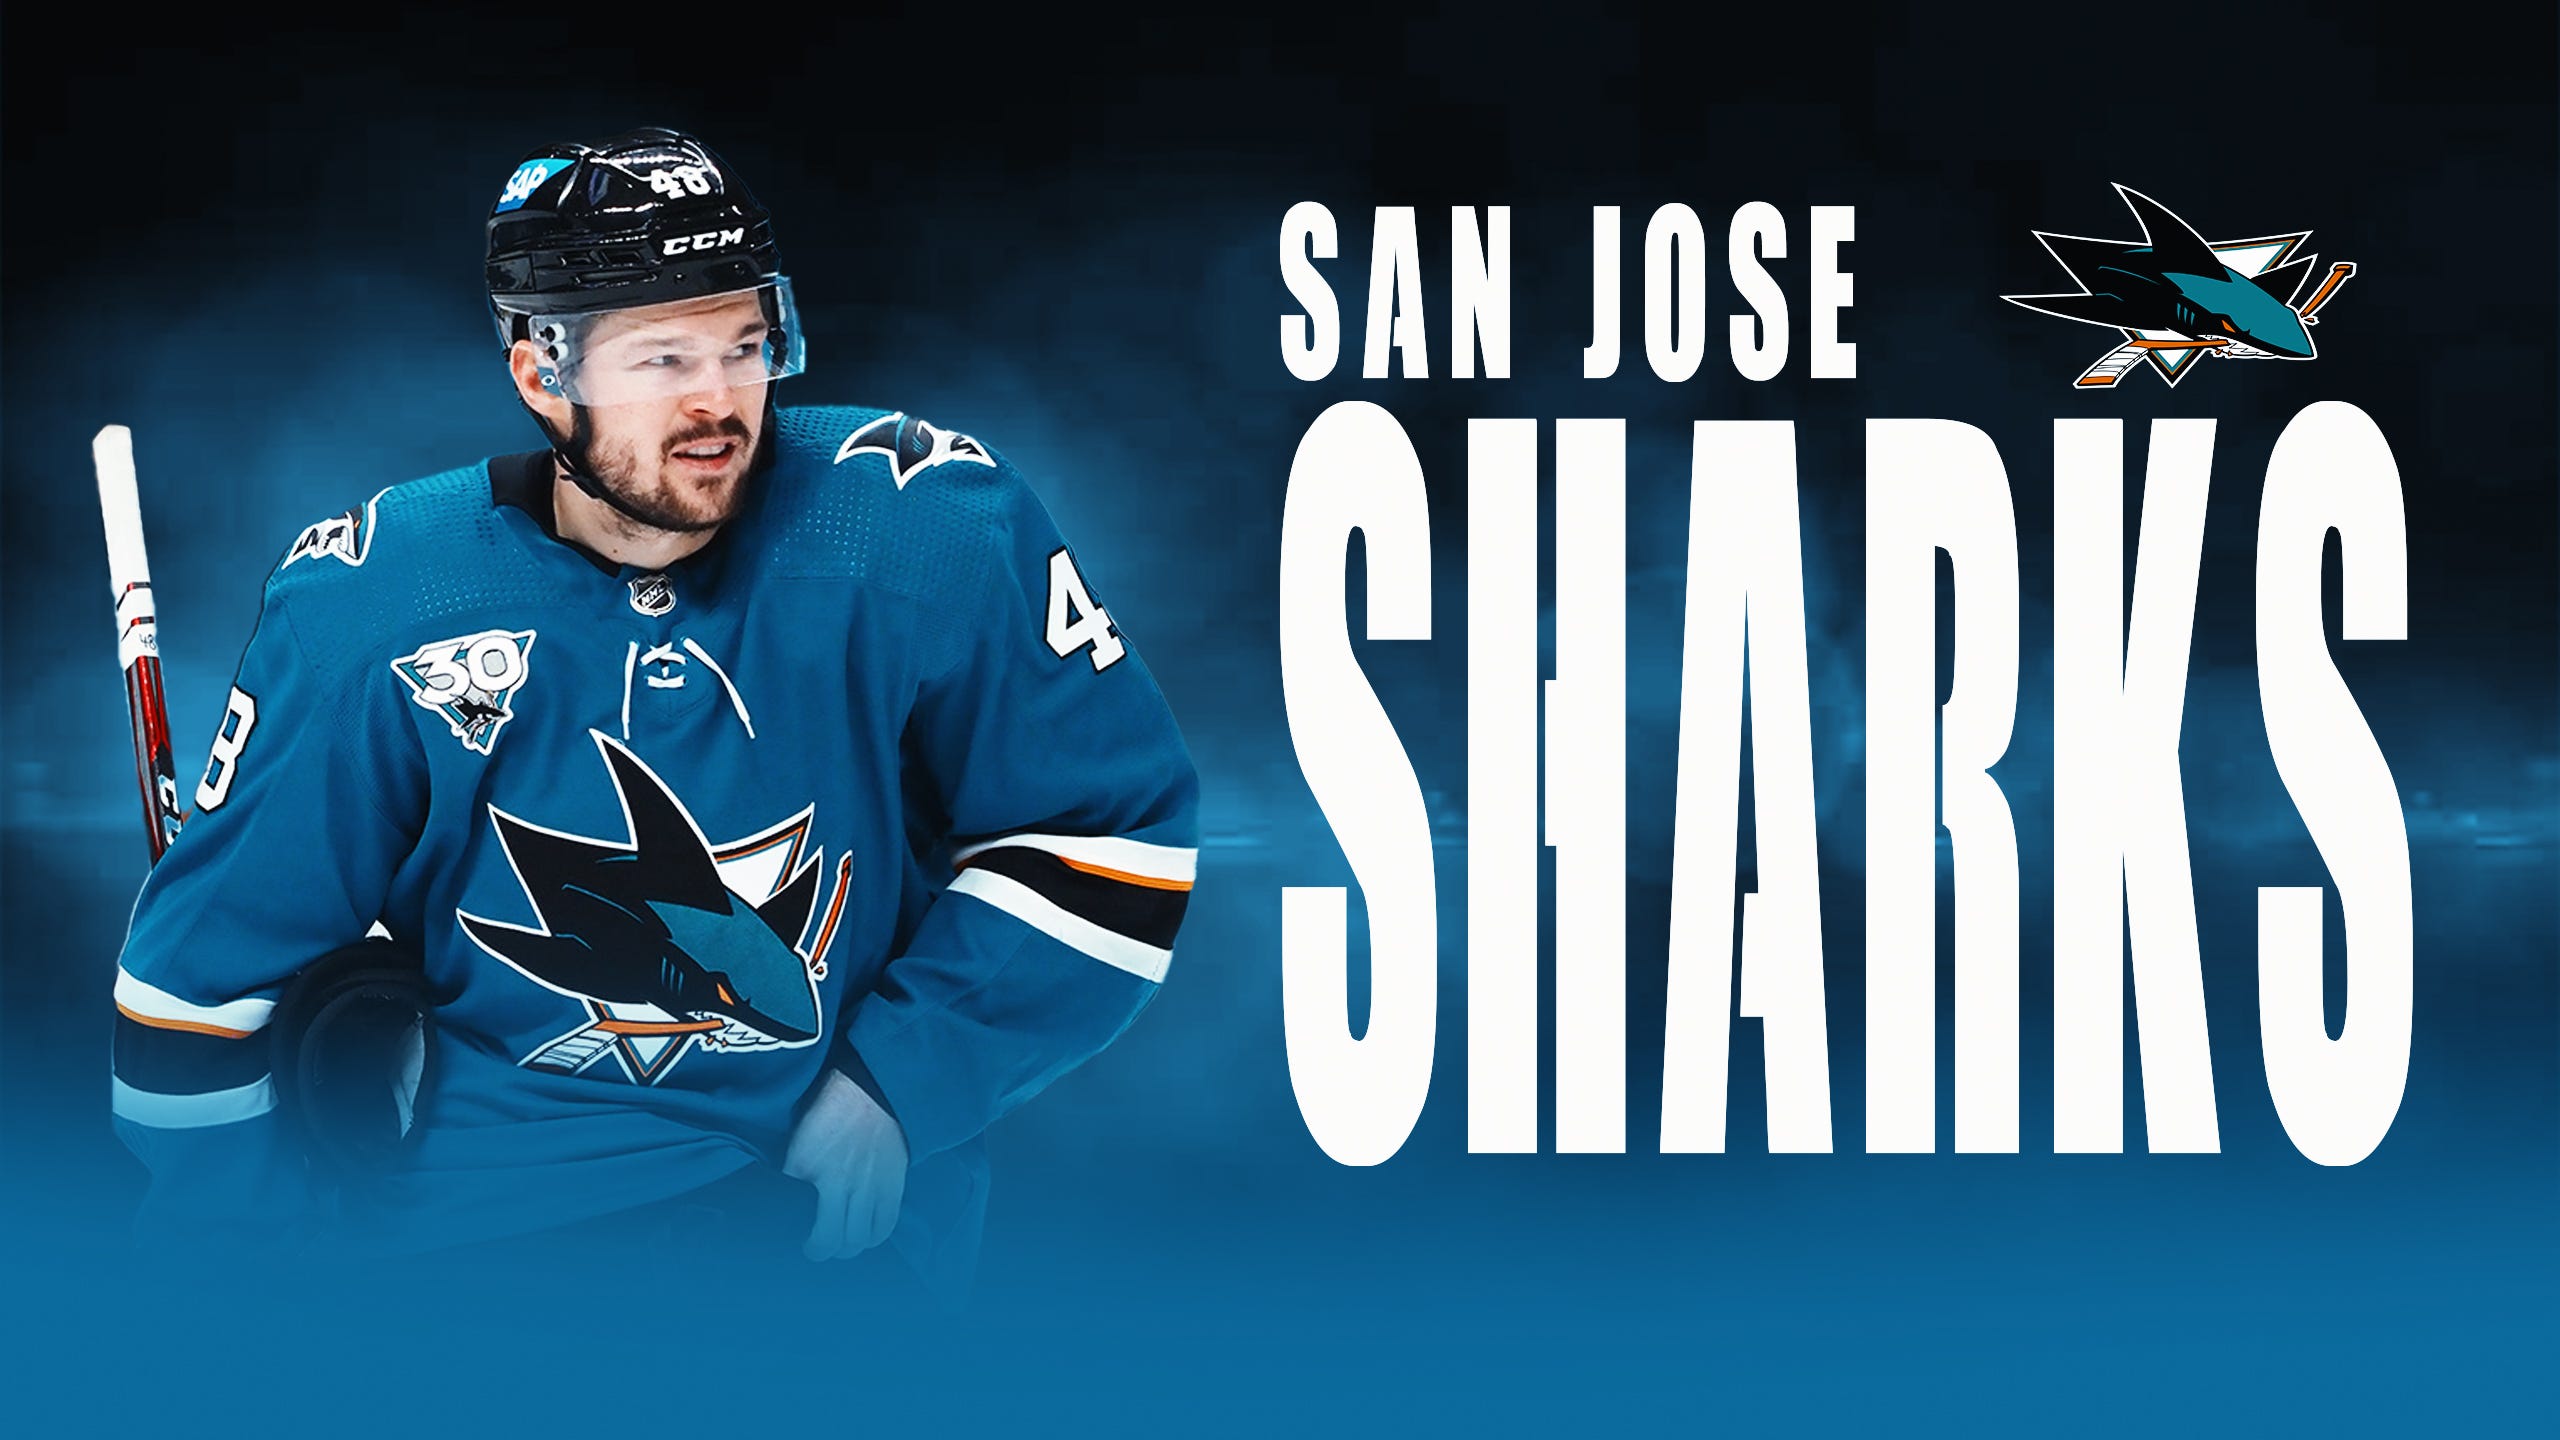 San Jose Sharks - ON ICE SWEATERS